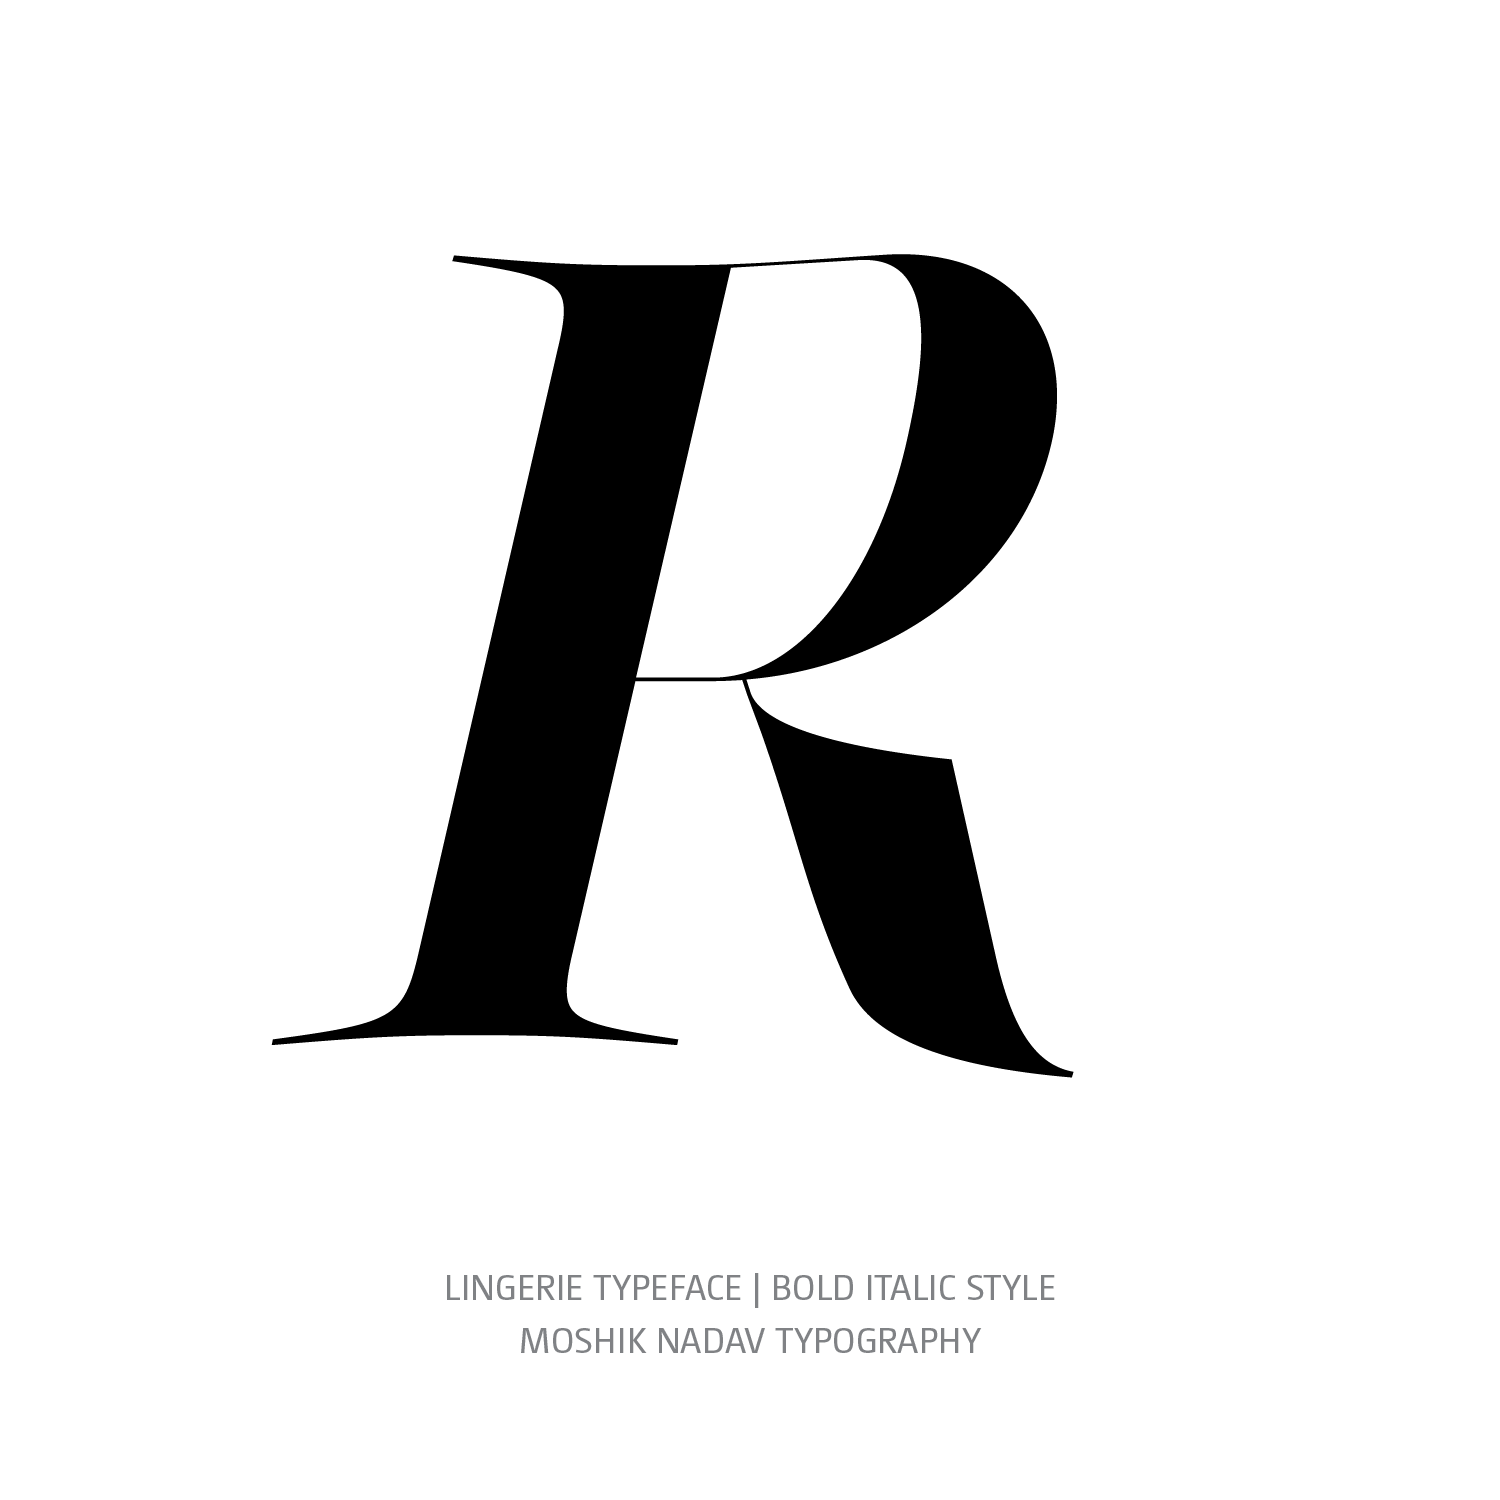 Lingerie Typeface Bold Italic R